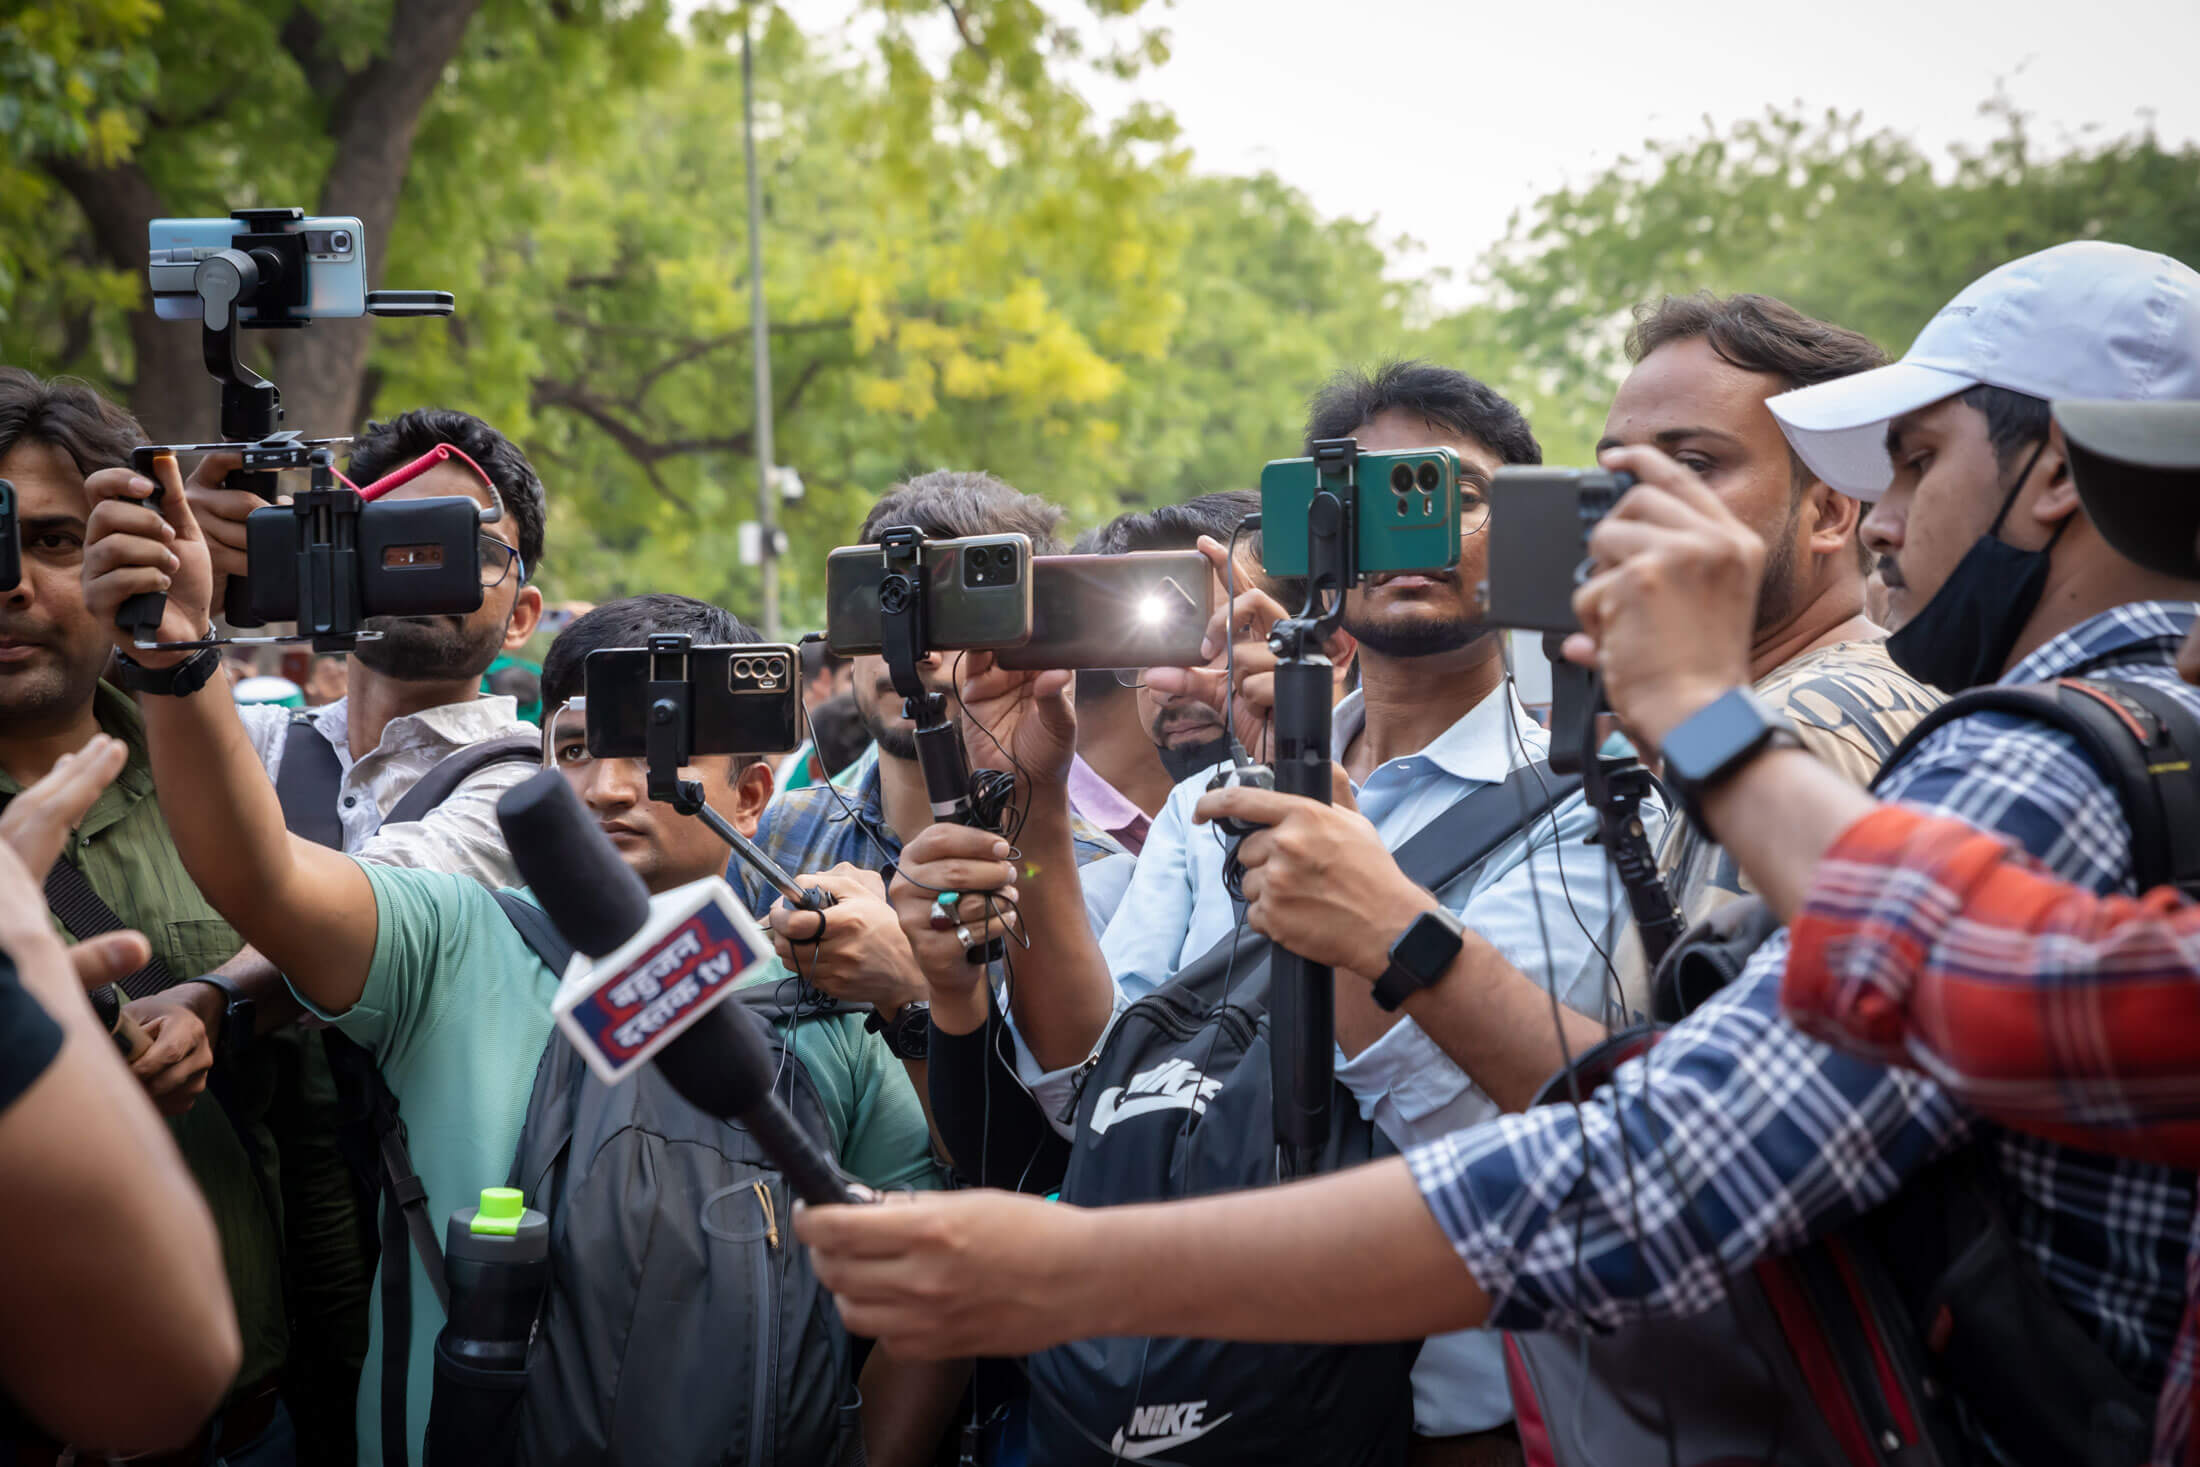 Local news reporting in Delhi, India. Credit: Sunny Rana Photography/Shutterstock